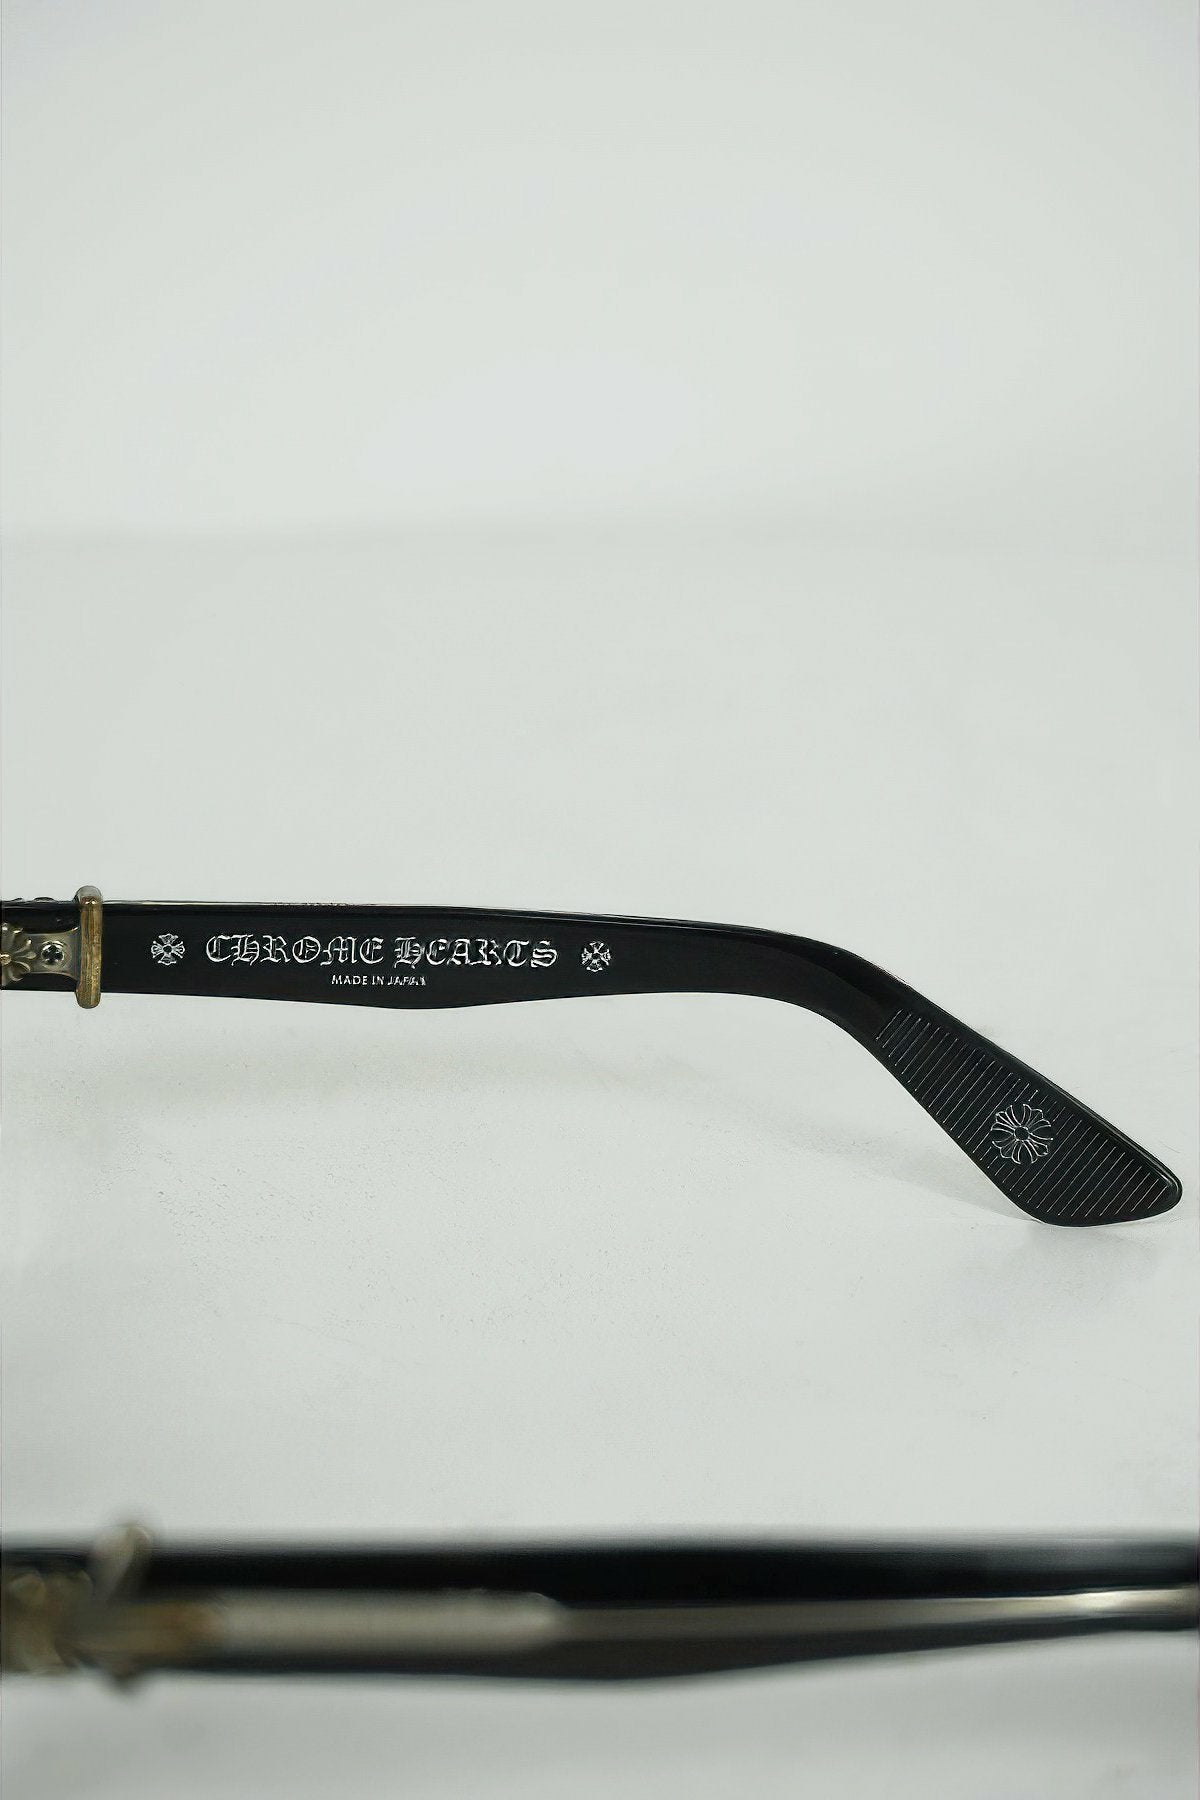 Chrome Hearts "Vagillionaire" i Black Glasses Silver Hardware